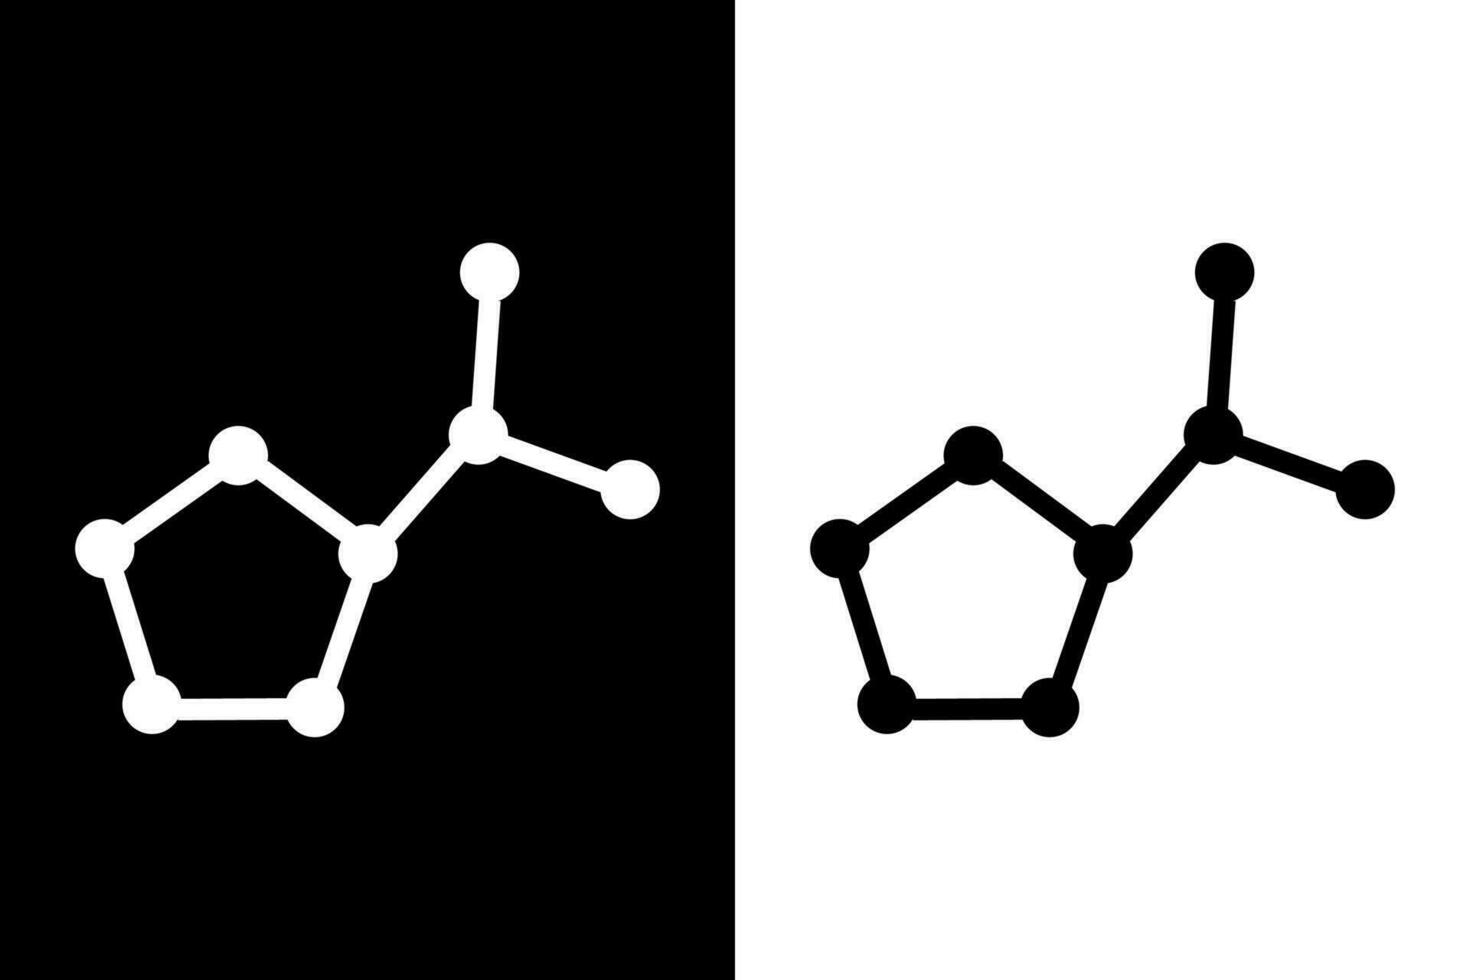 Proline amino acid molecule. Oxygen, Carbon and Nitrogen atoms shown as circles in vector illustration.